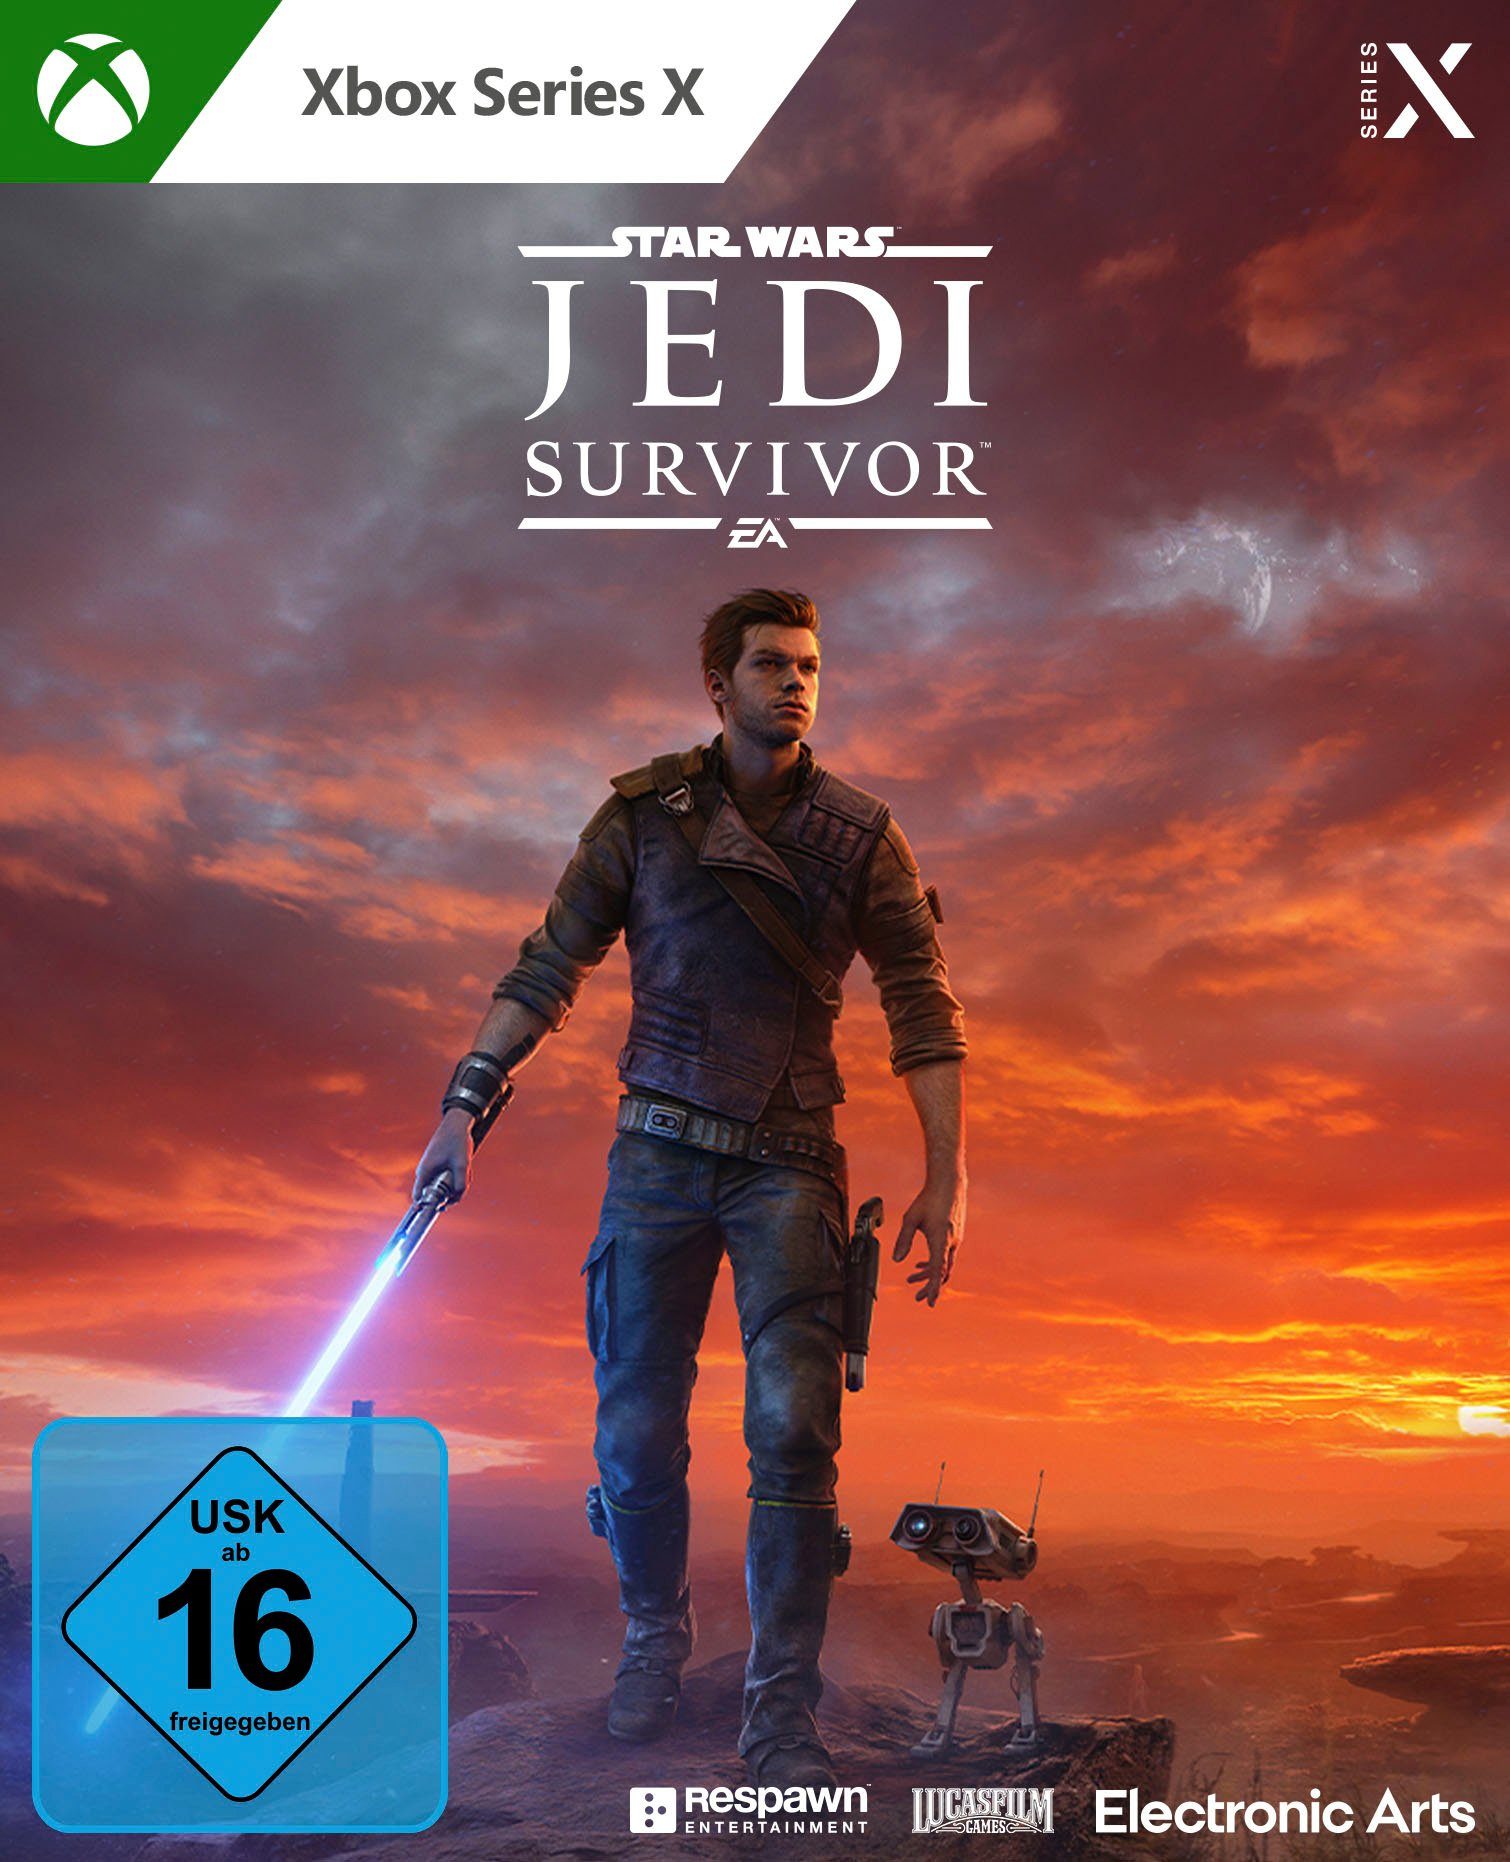 Xbox Survivor Jedi Electronic Series Arts Wars: Star X